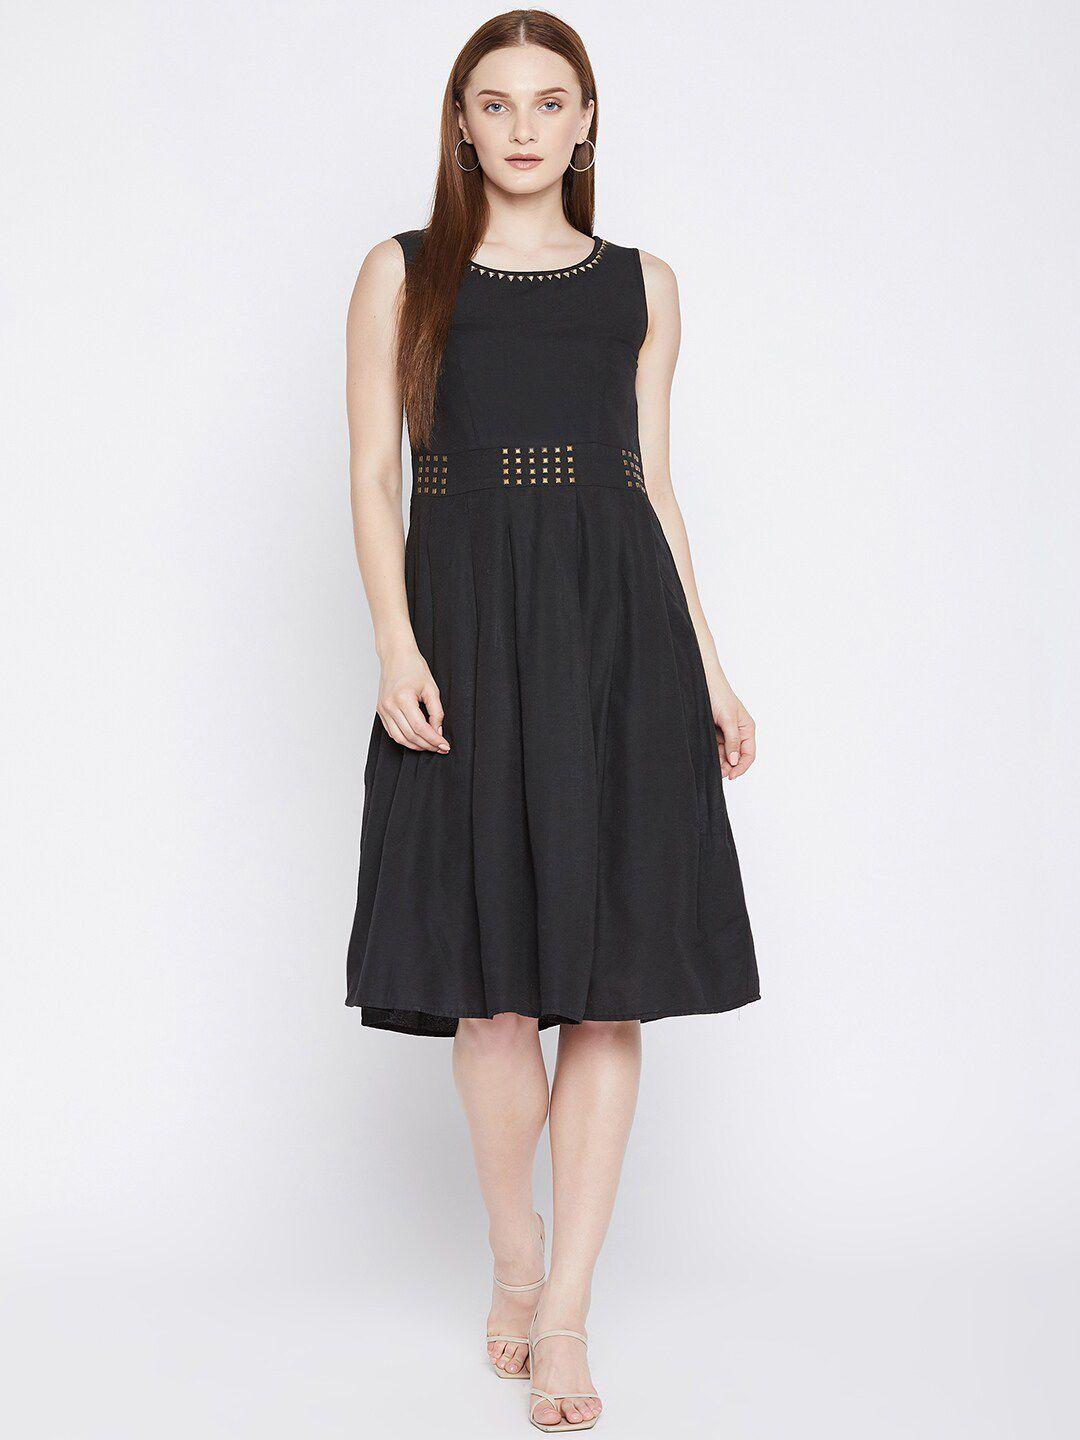 baesd black a-line dress